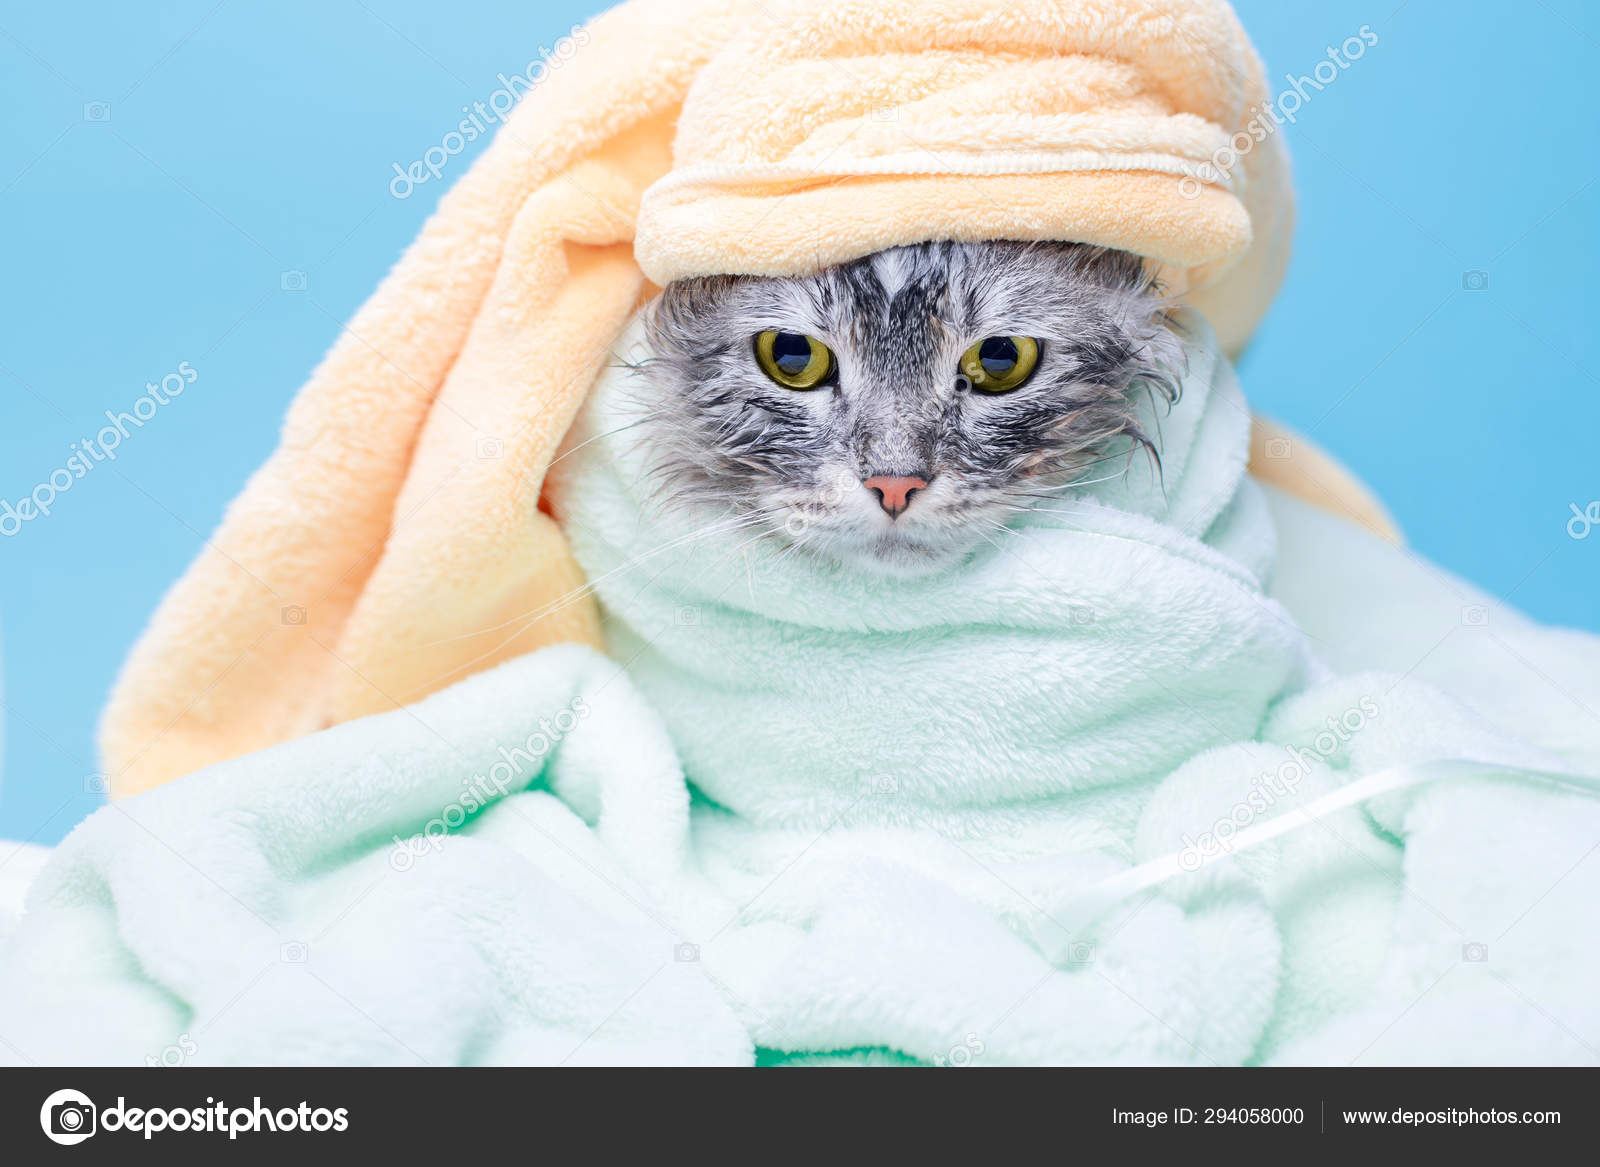 cat bath mat uk